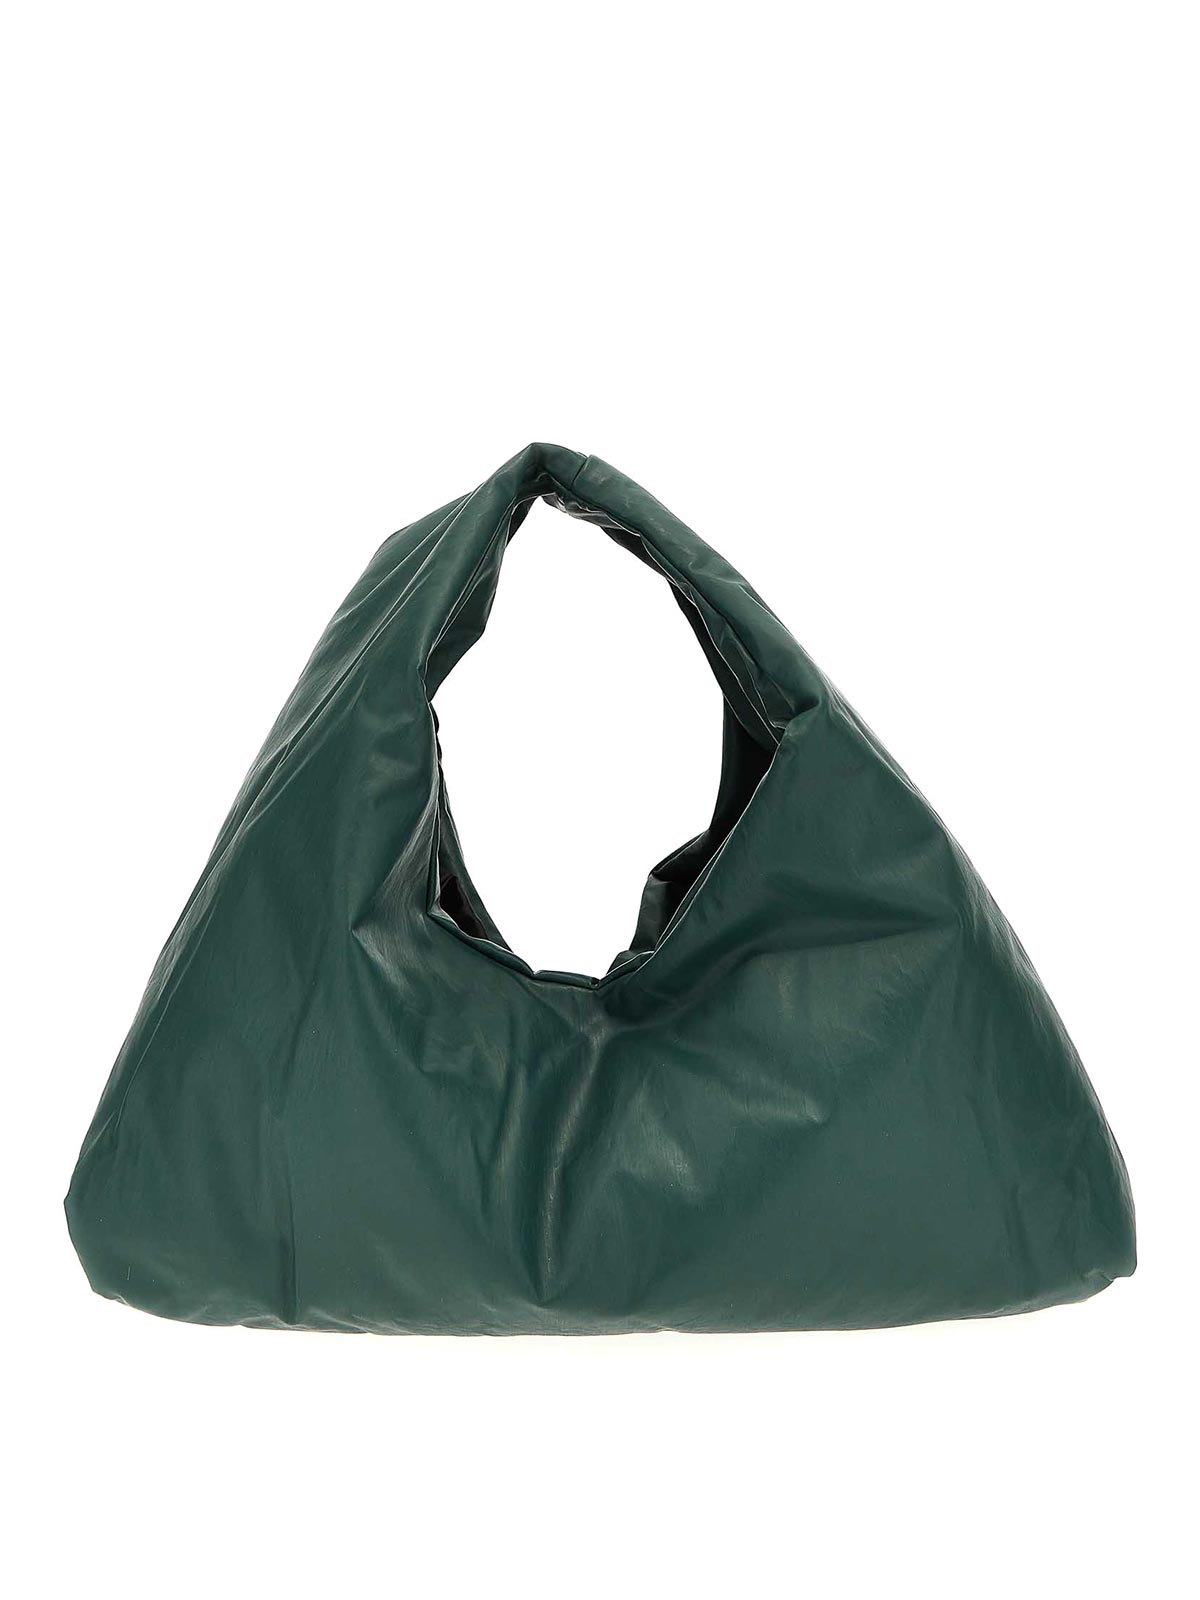 Shop Kassl Editions Anchor Small Handbag In Green